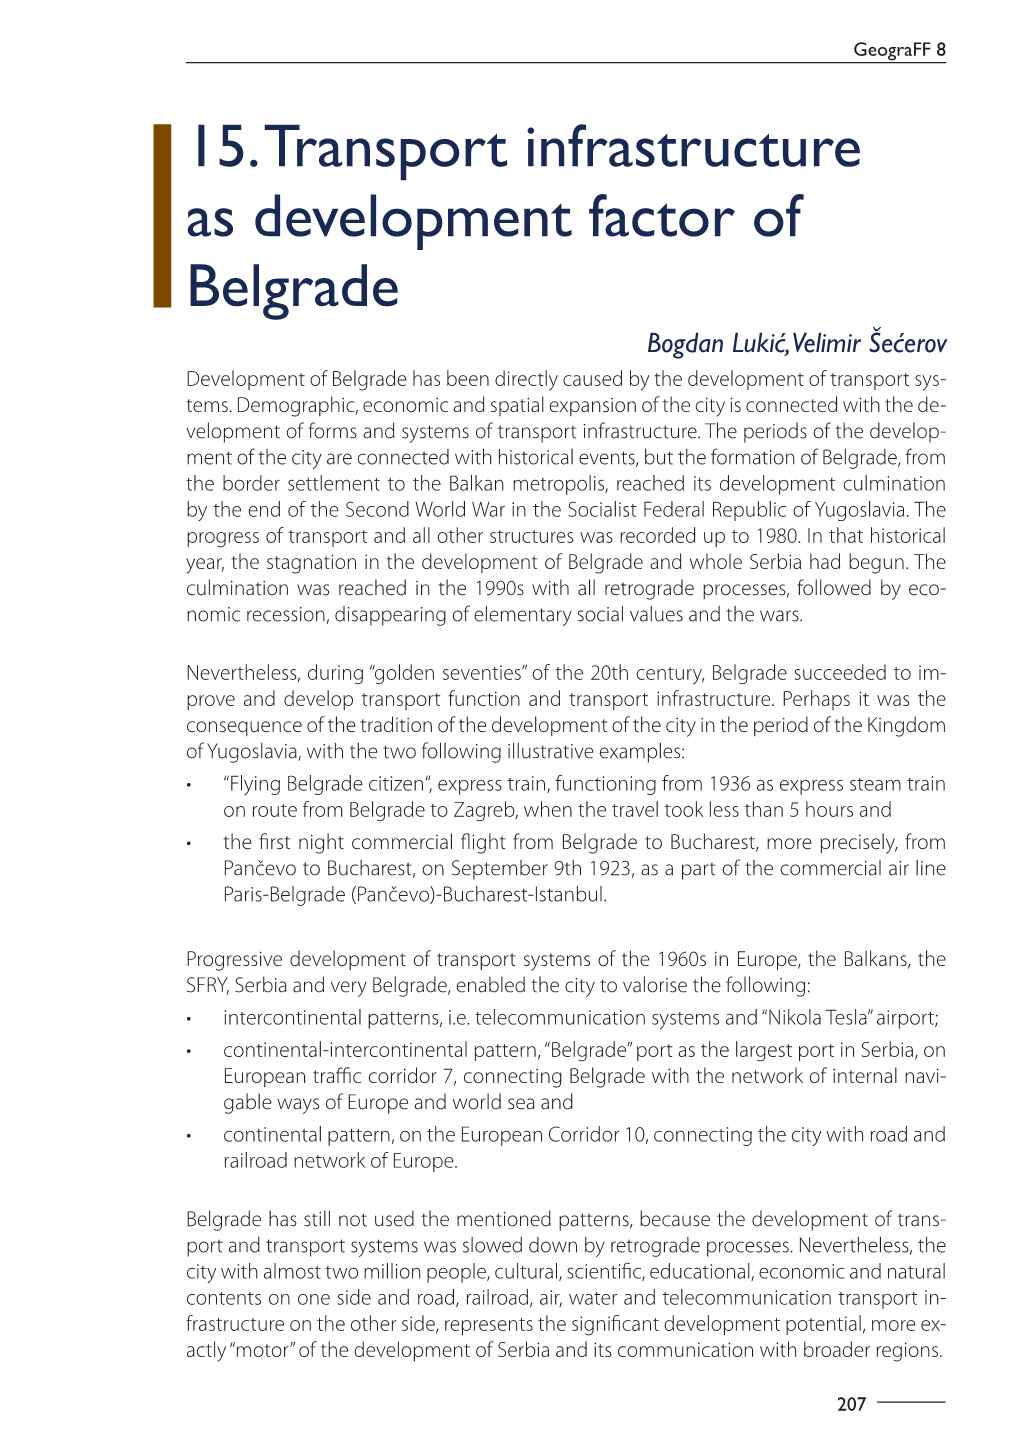 15. Transport Infrastructure As Development Factor of Belgrade